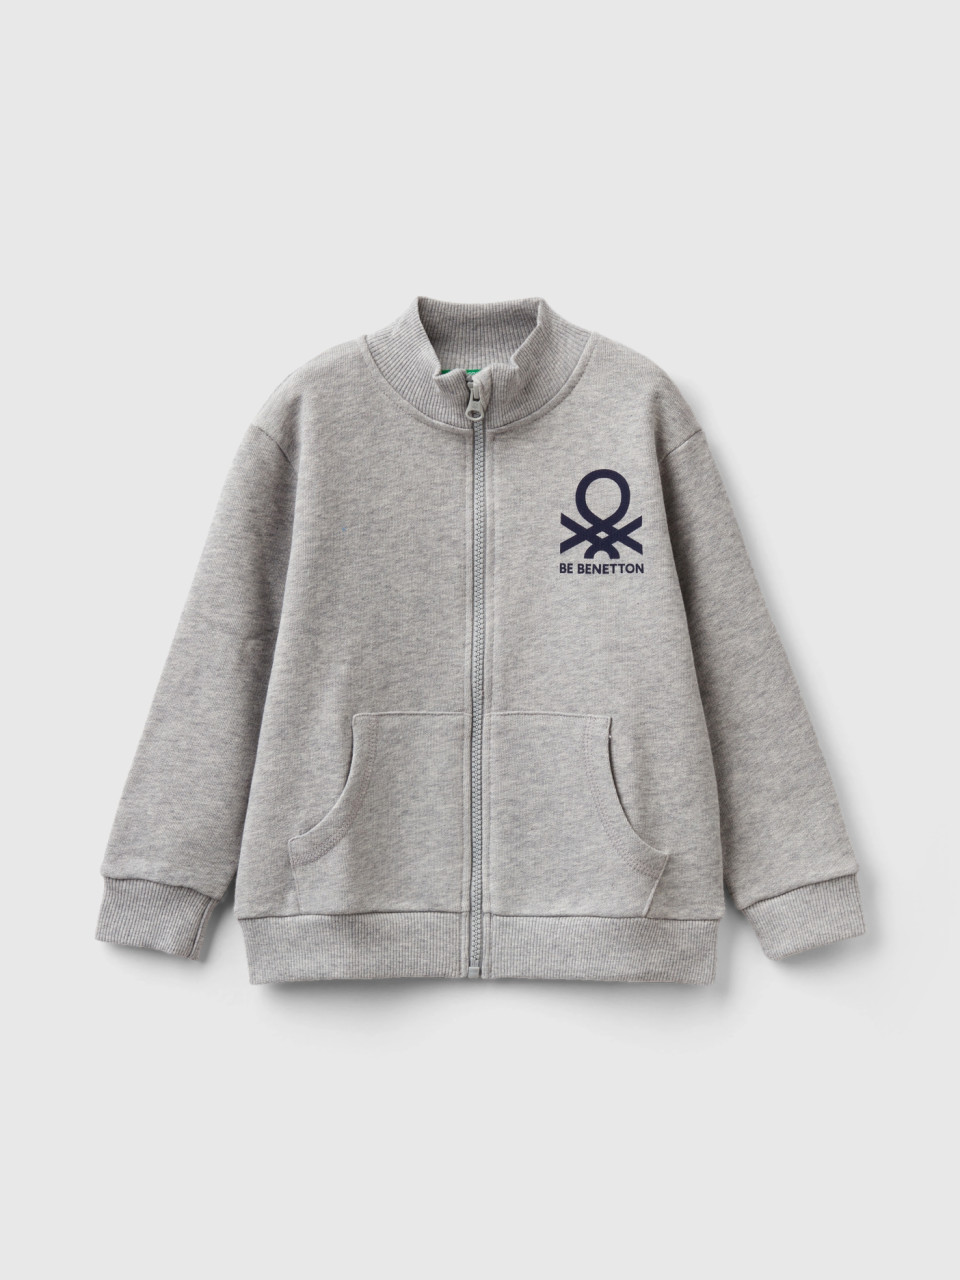 Benetton, Sweatshirt In Organic Cotton With Zip, Light Gray, Kids